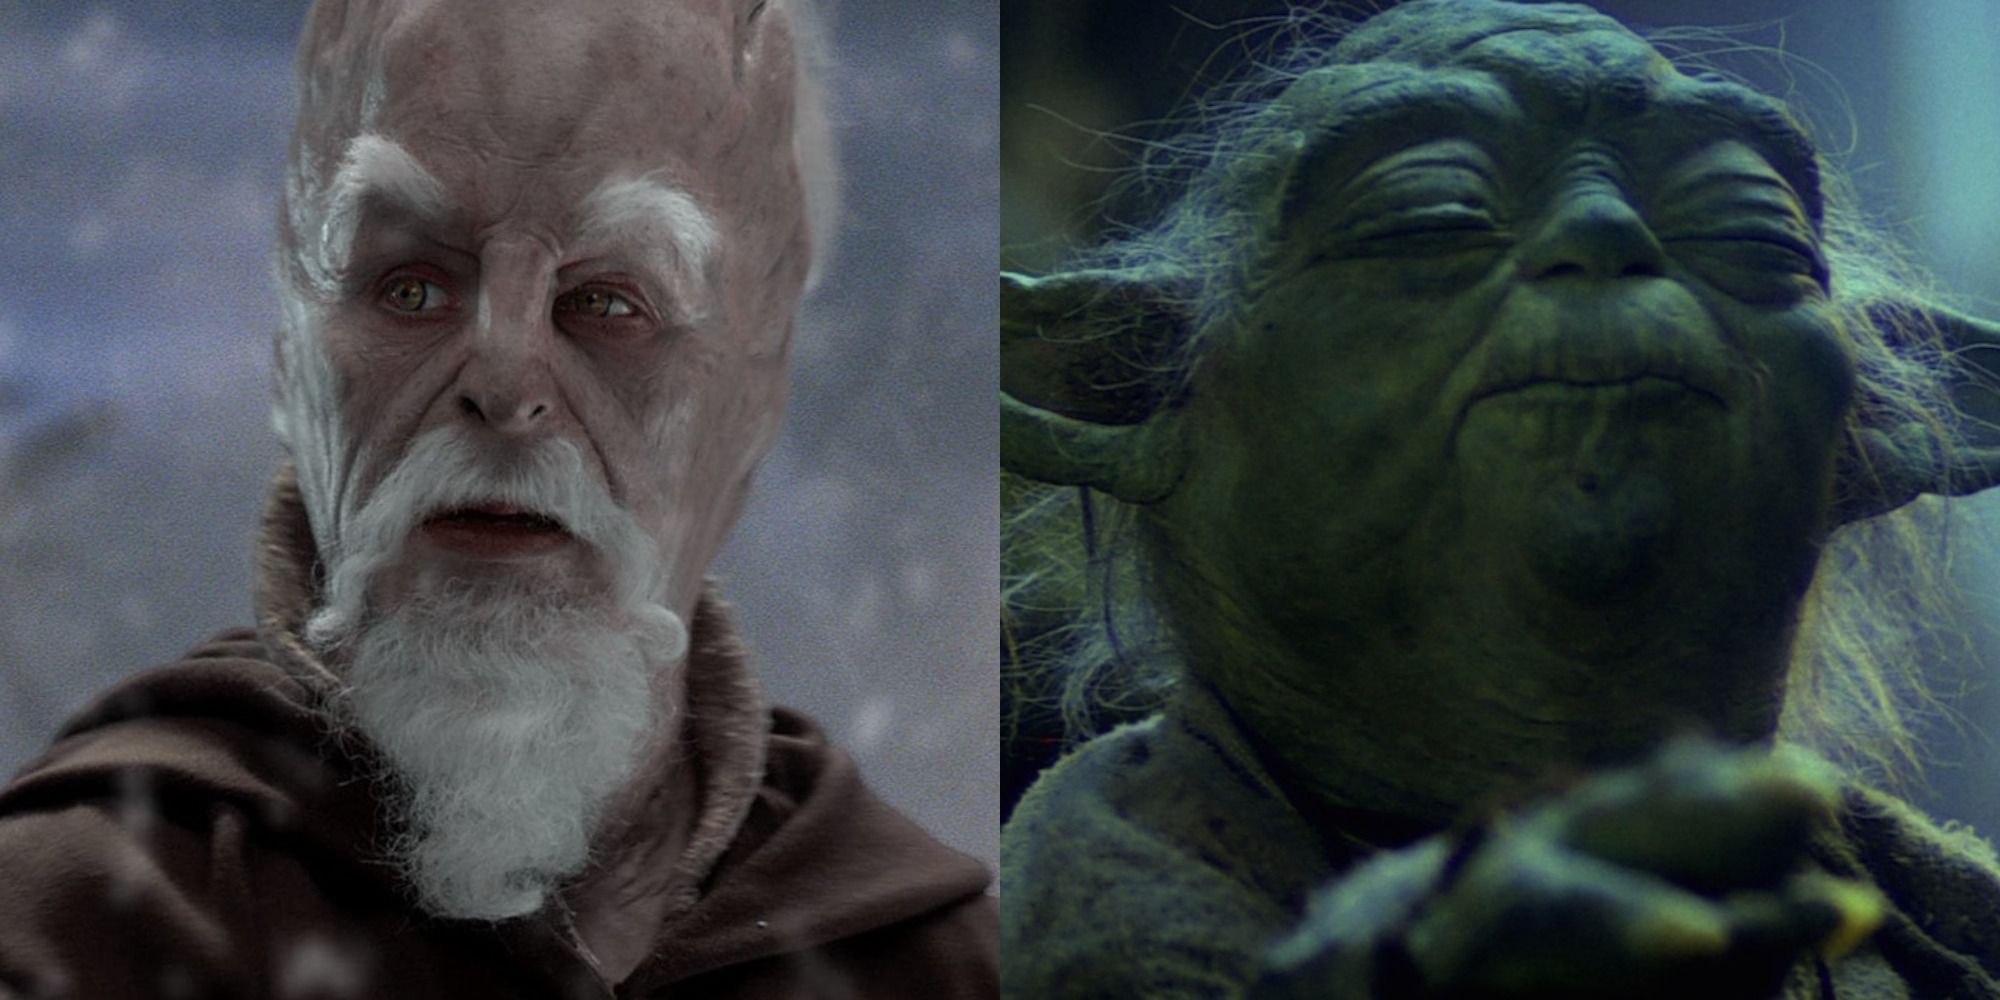 Split image of Jesi Ki-Adi-Mundi and Yoda from Stars Wars movies